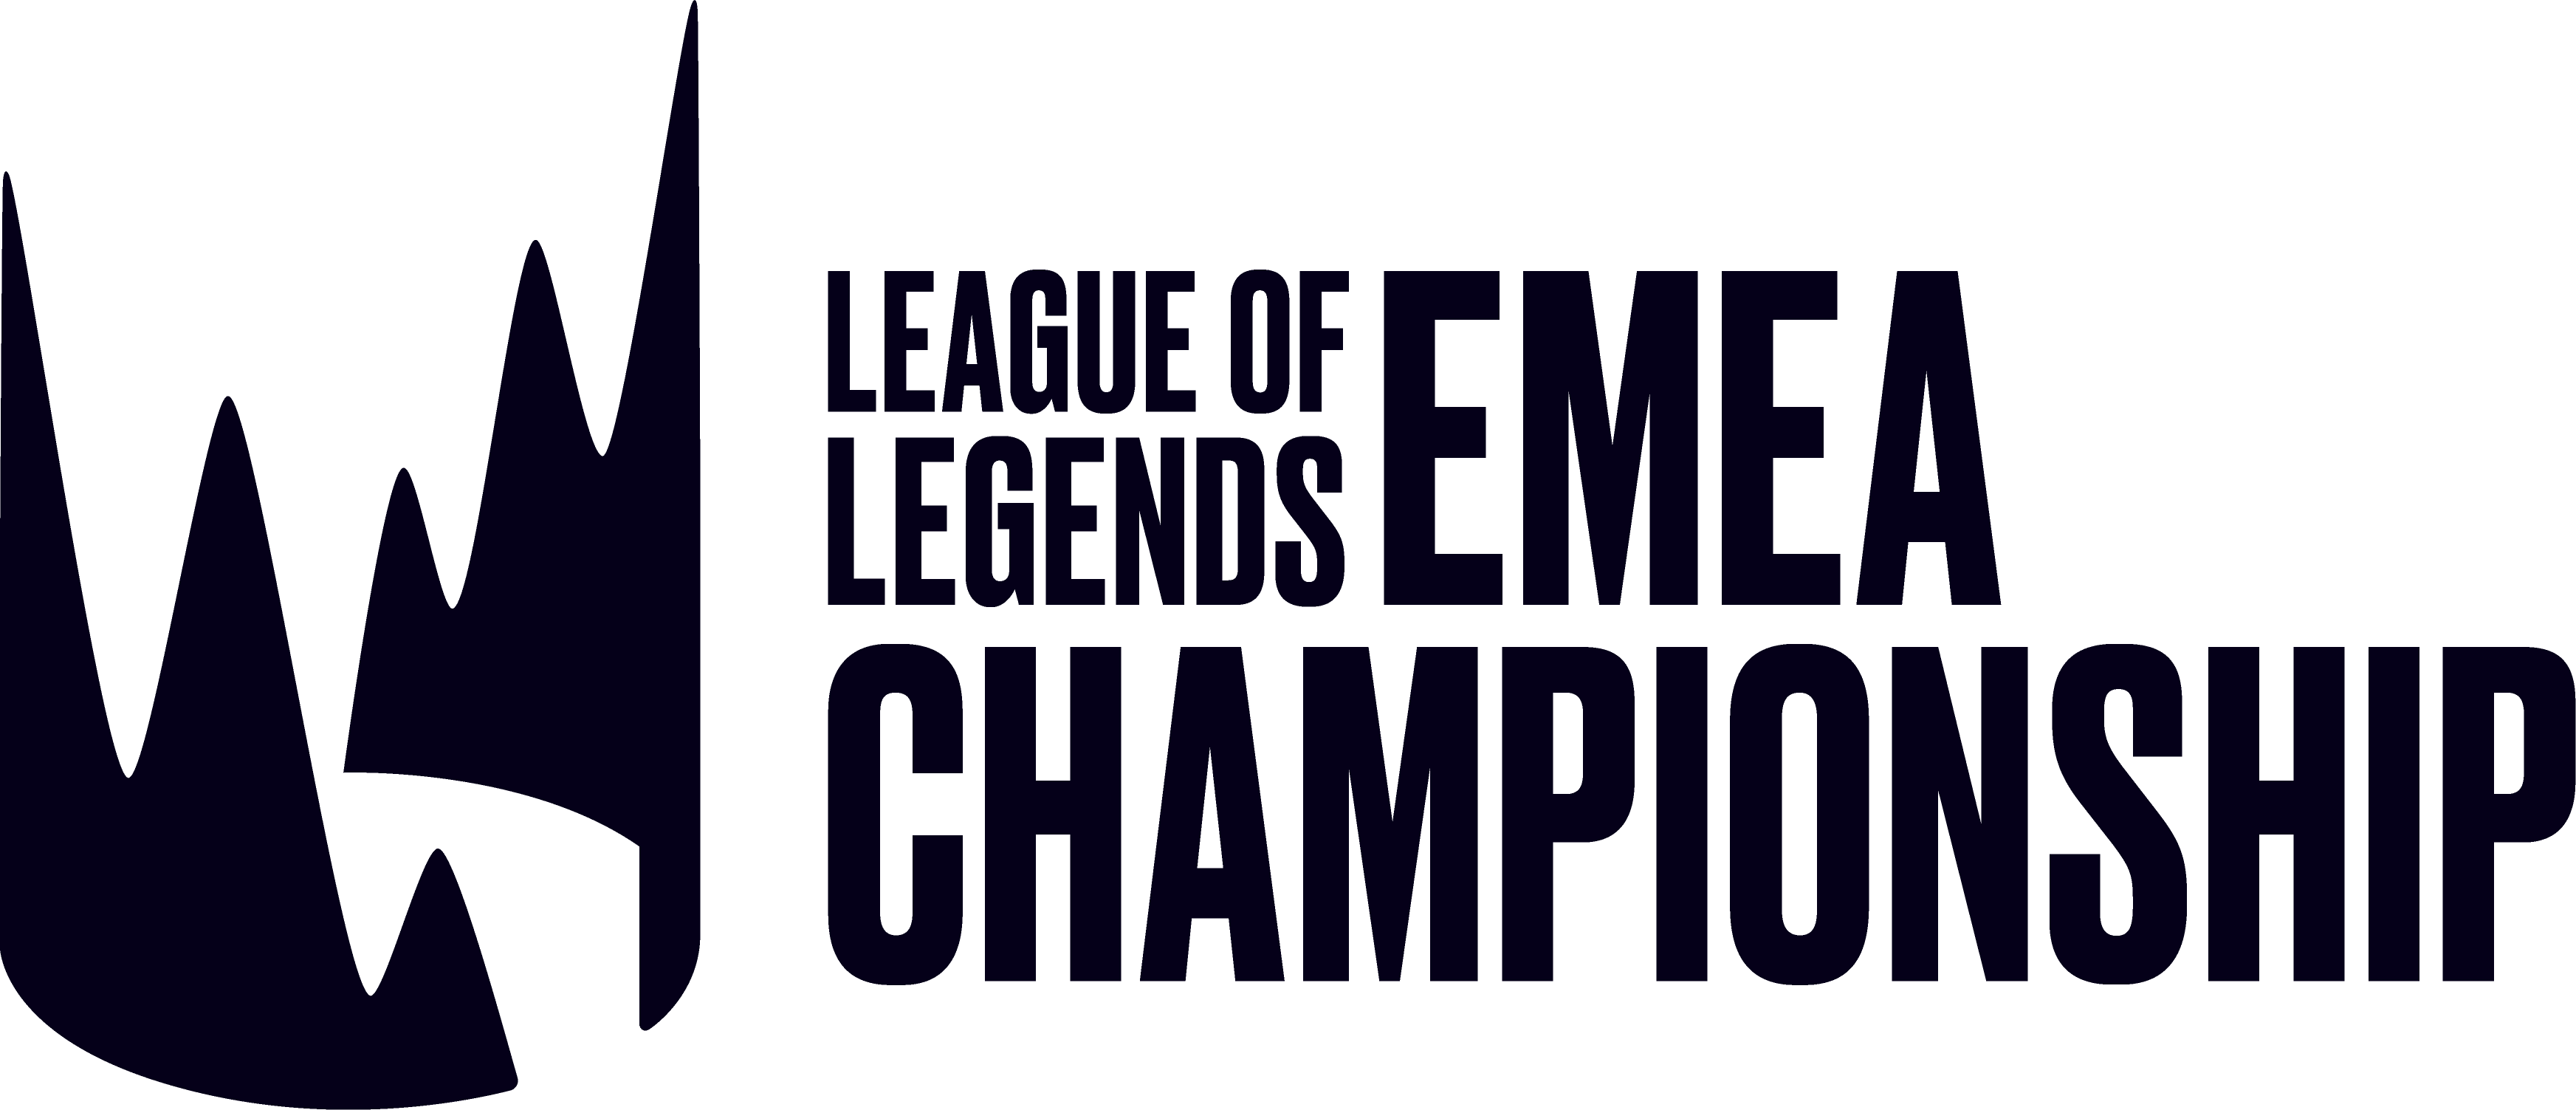 League of Legends World Championship - Wikipedia